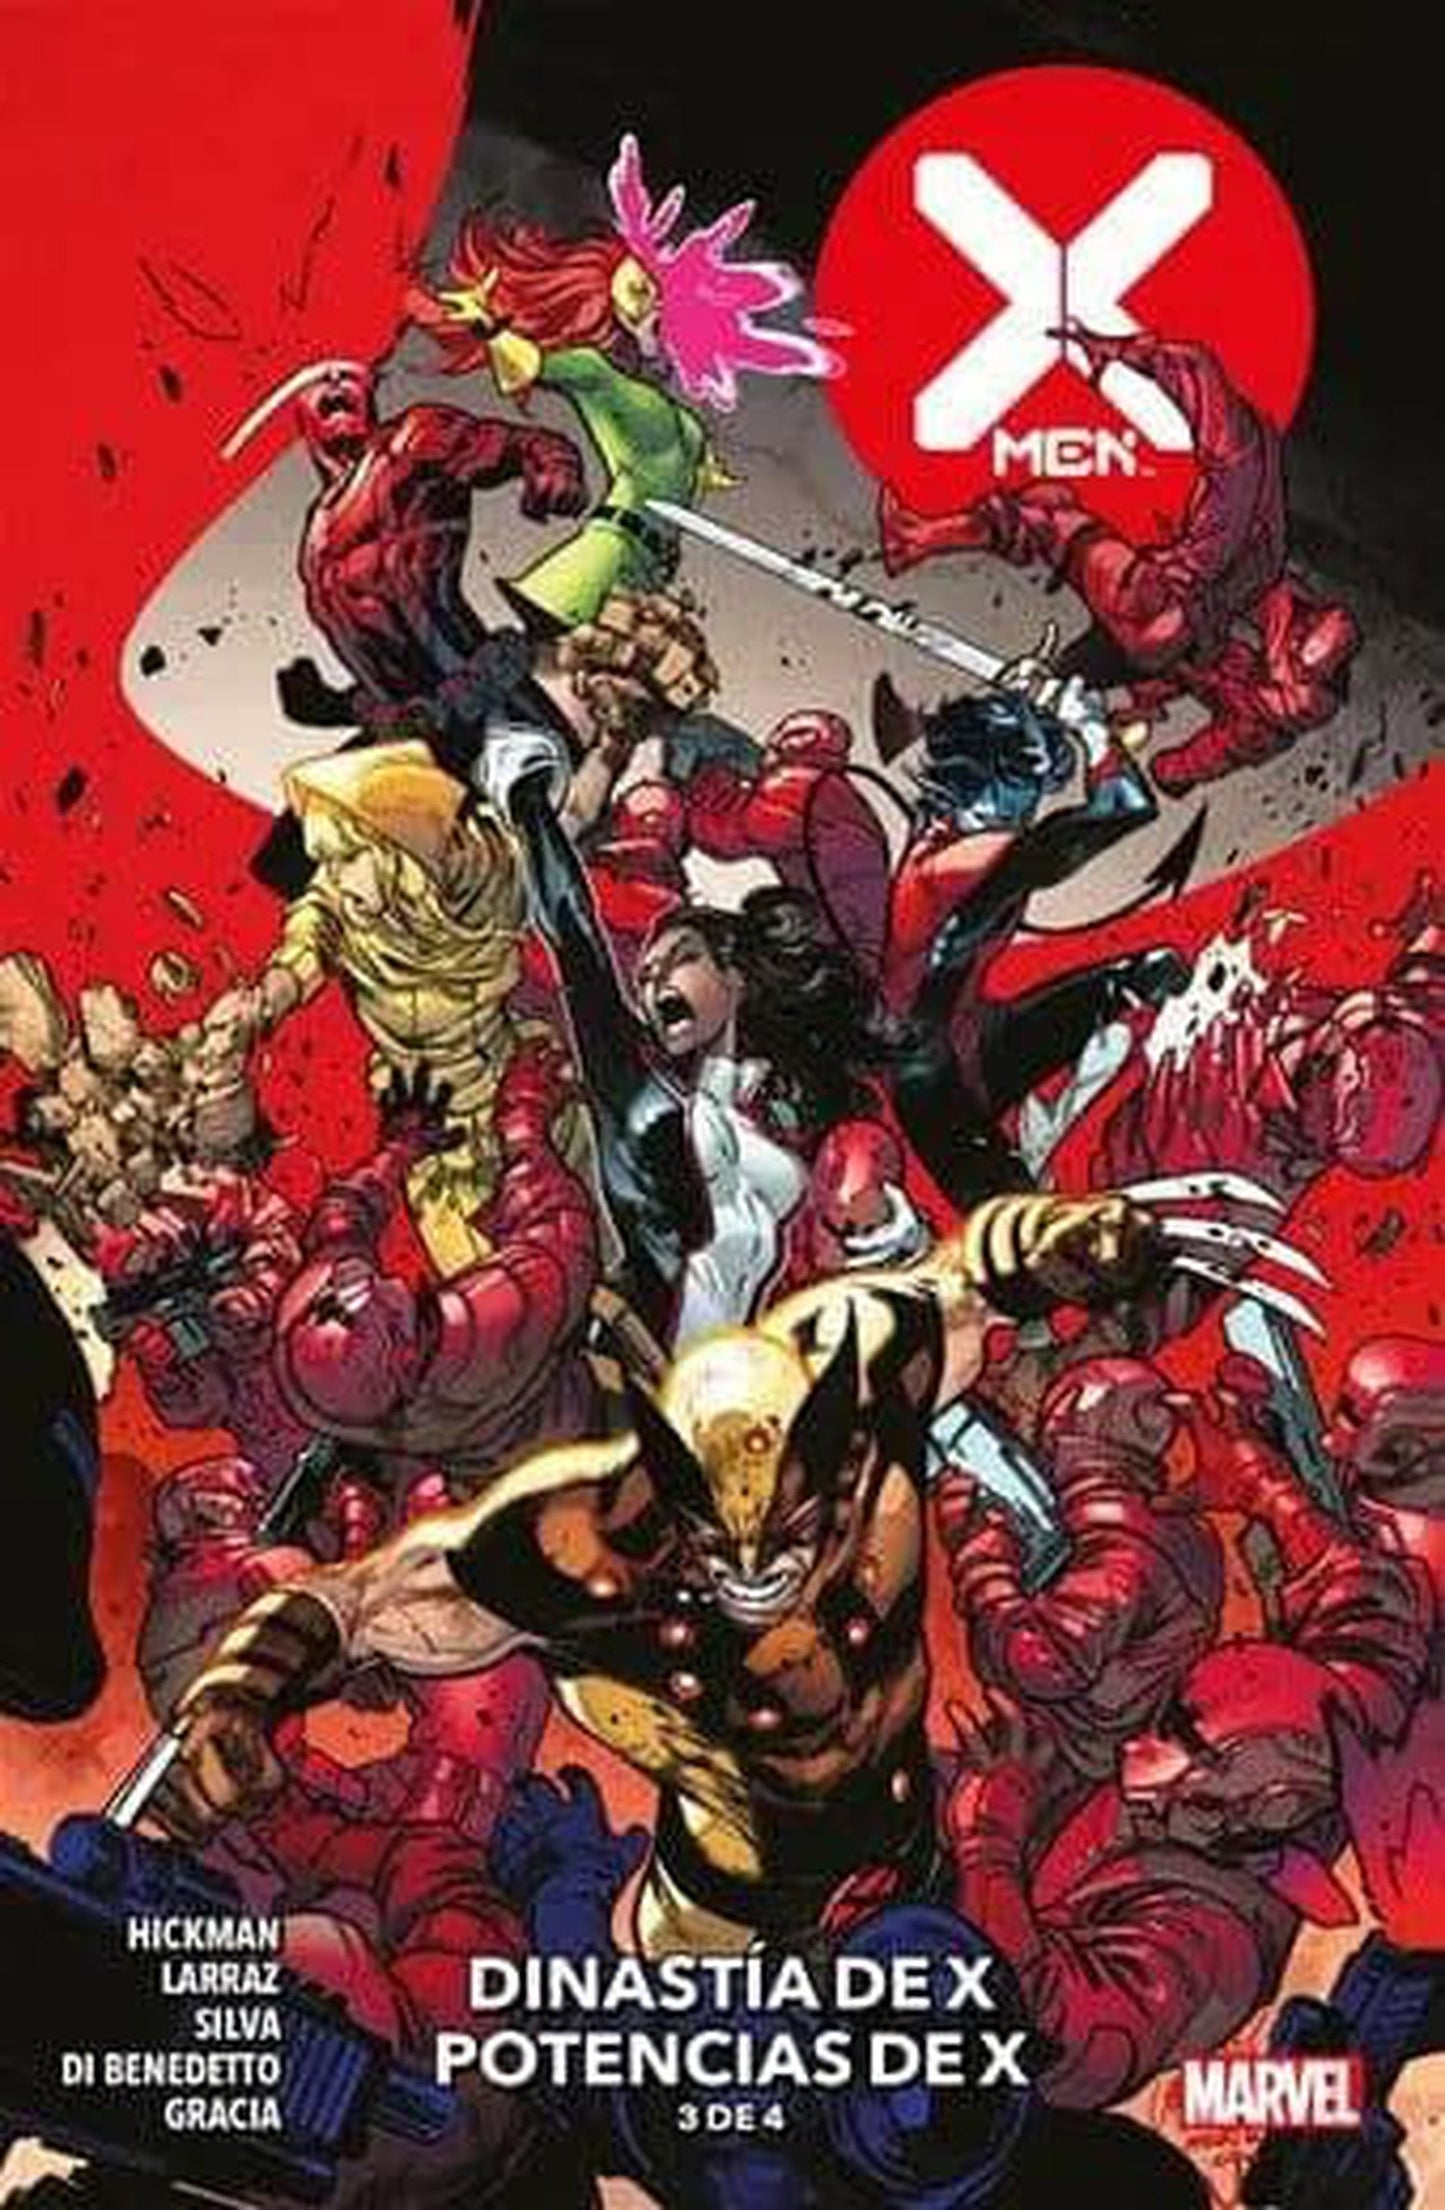 X-Men Vol. 3 Dinastia de X Potencias de X (3 de 4)